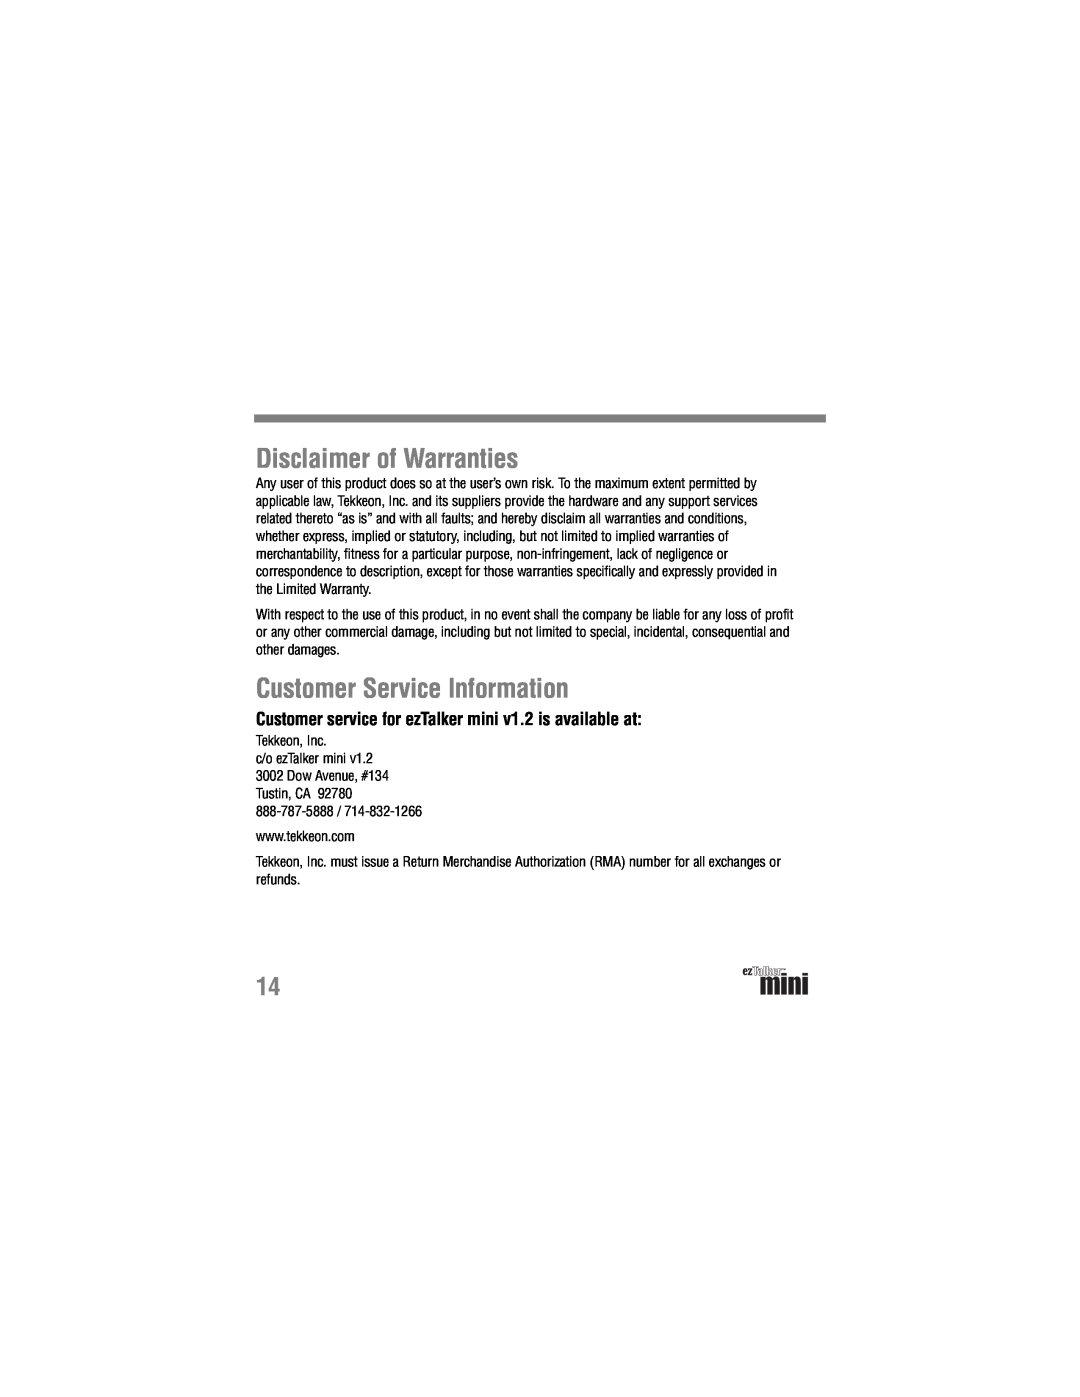 Tekkeon ET2000 manual Disclaimer of Warranties, Customer Service Information 